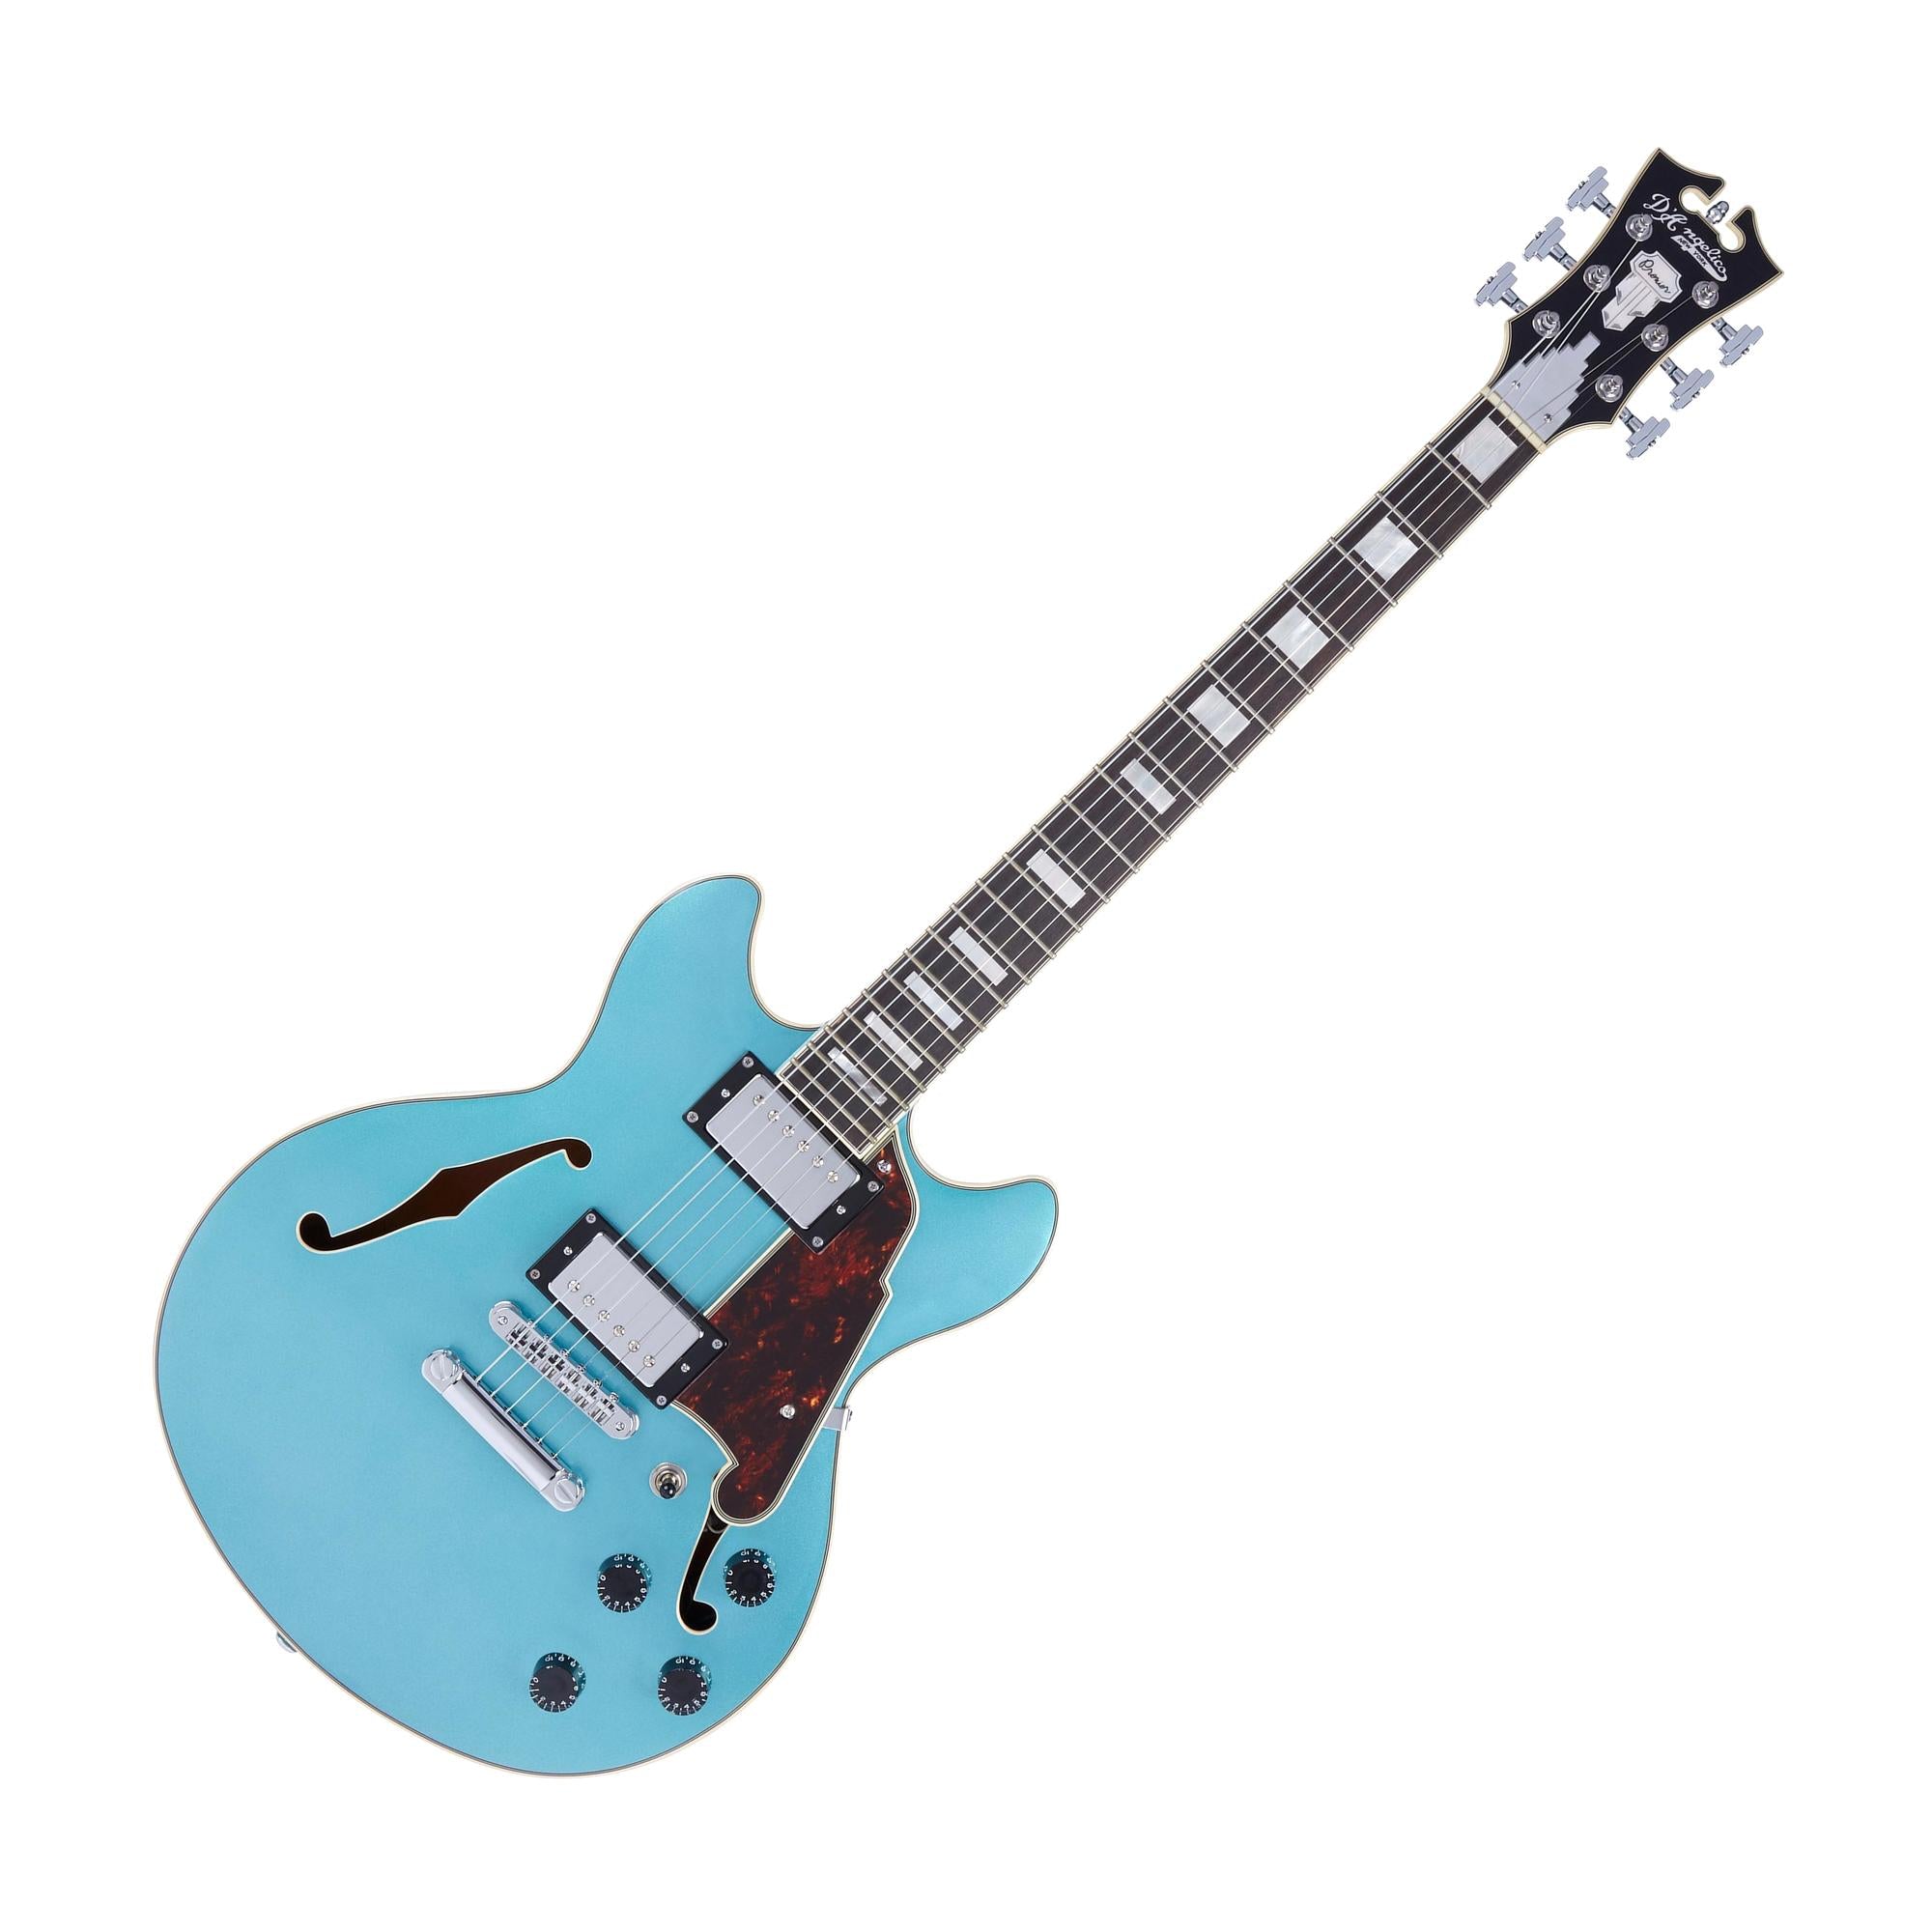 D'Angelico Premier Mini DC Semi-Hollow Electric Guitar, Ocean Turquoise